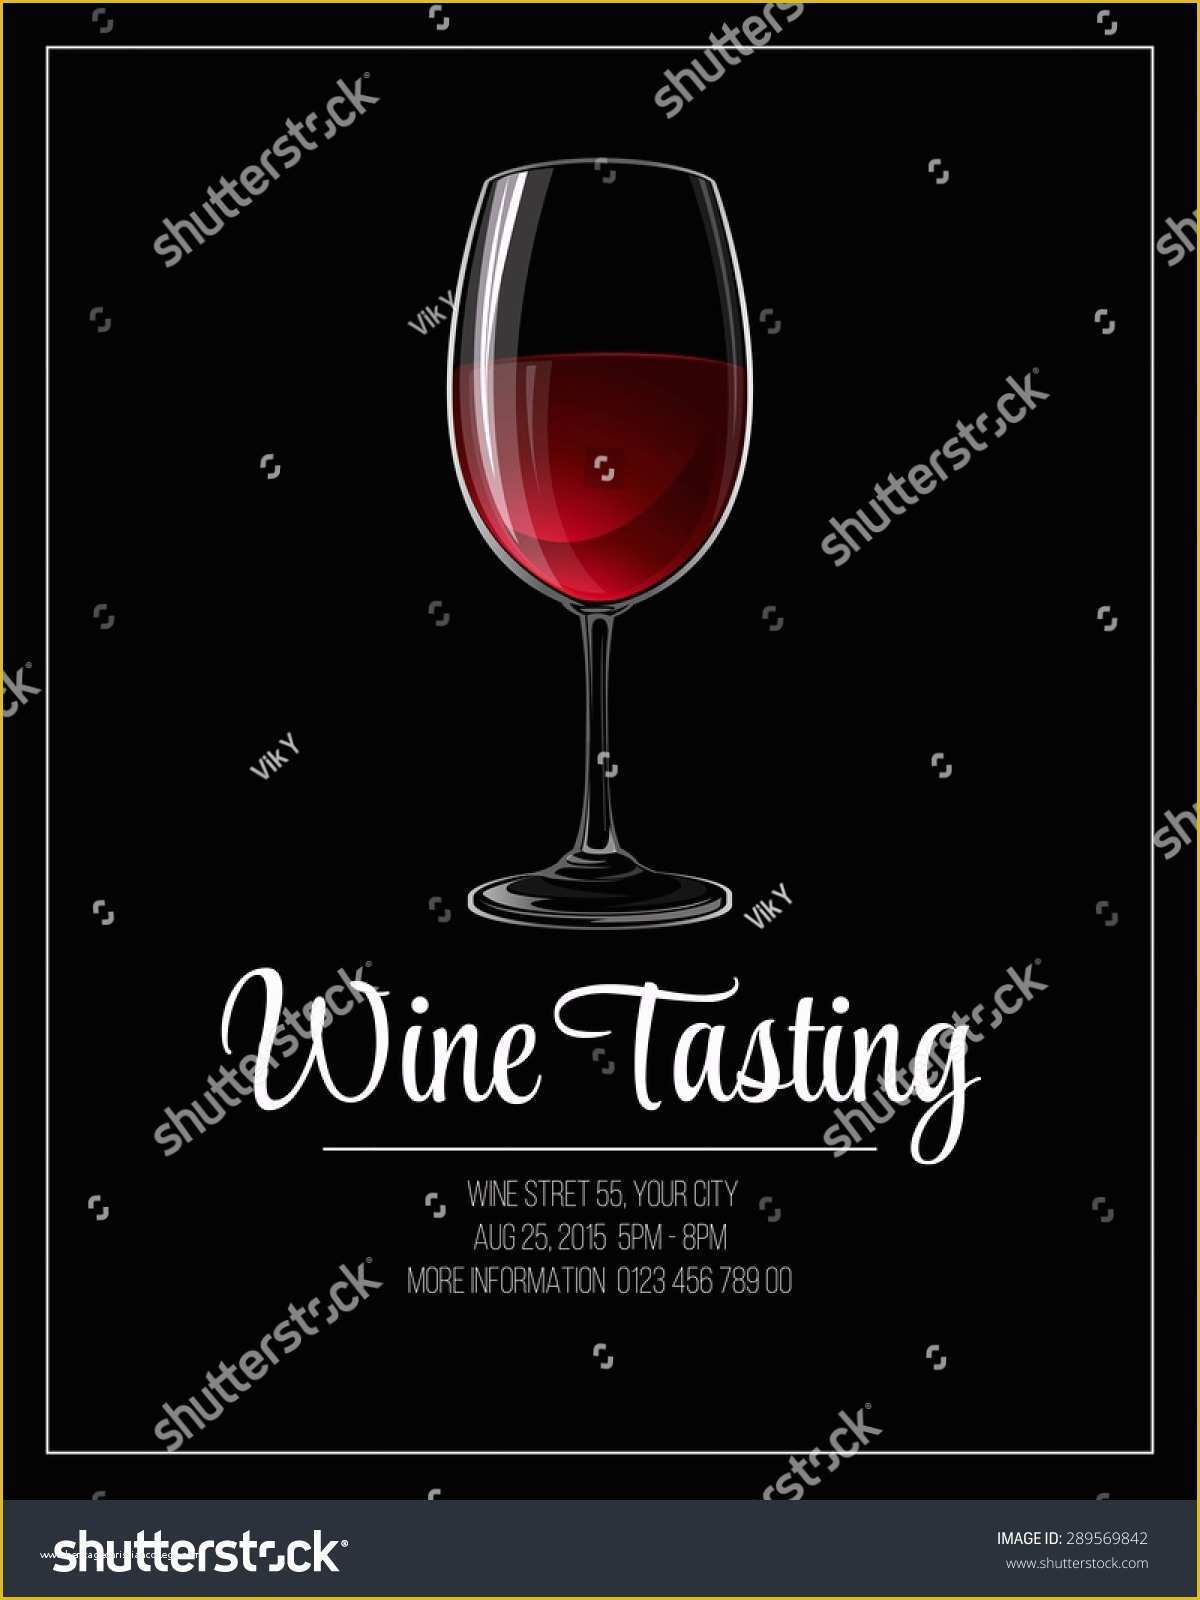 Free Wine Tasting Flyer Template Of Wine Tasting Flyer Template Vector Illustration Stock